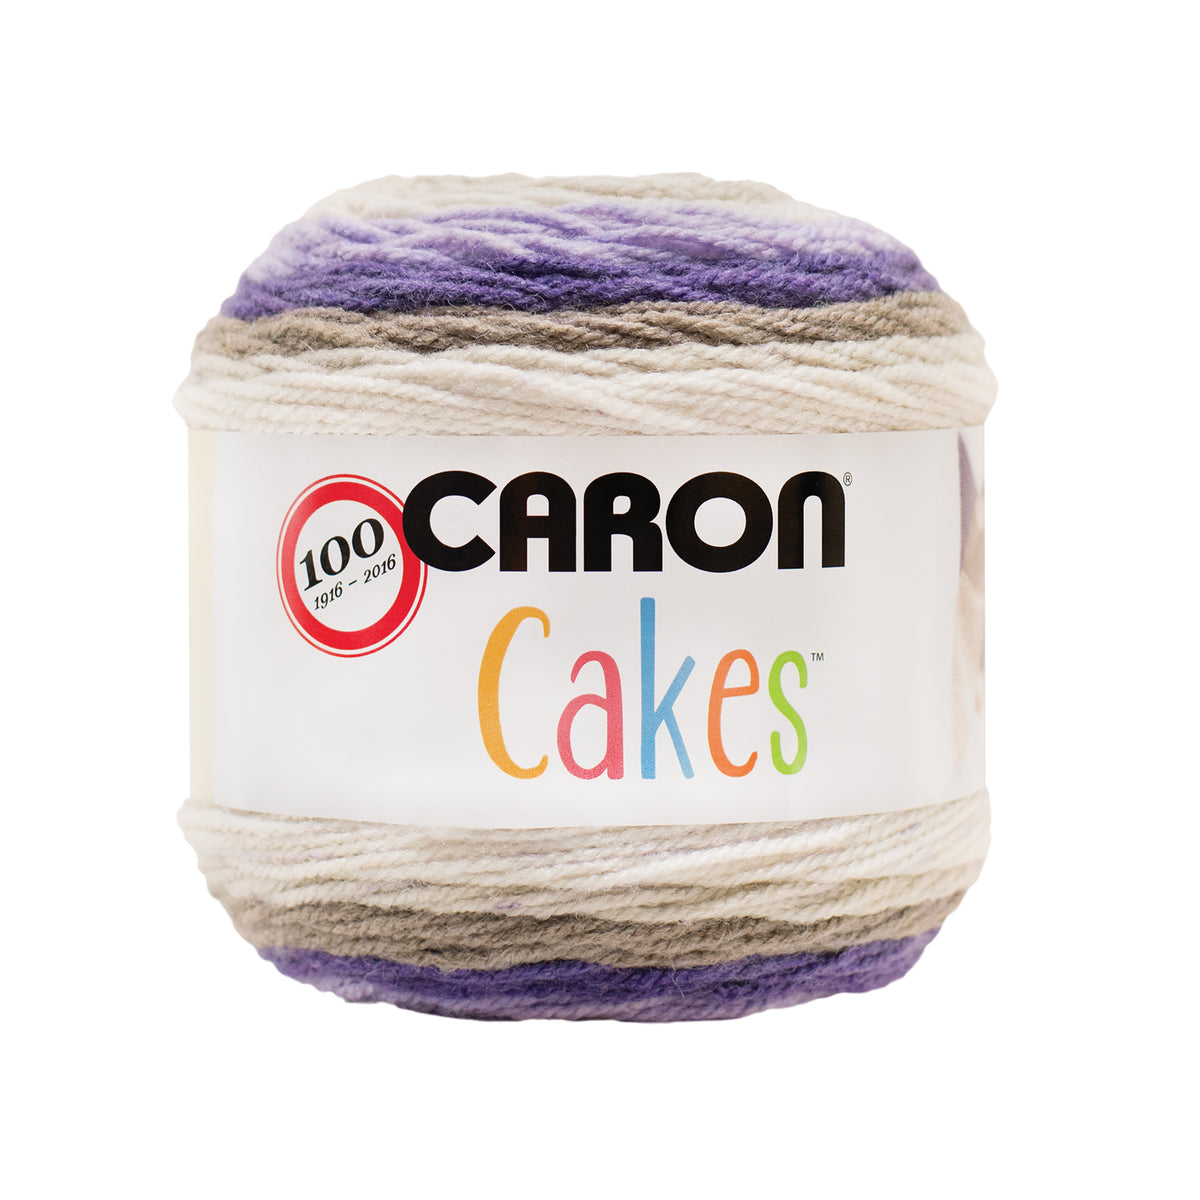 Caron Cakes Self Striping Yarn 383 yd 200 G (Bumbleberry)